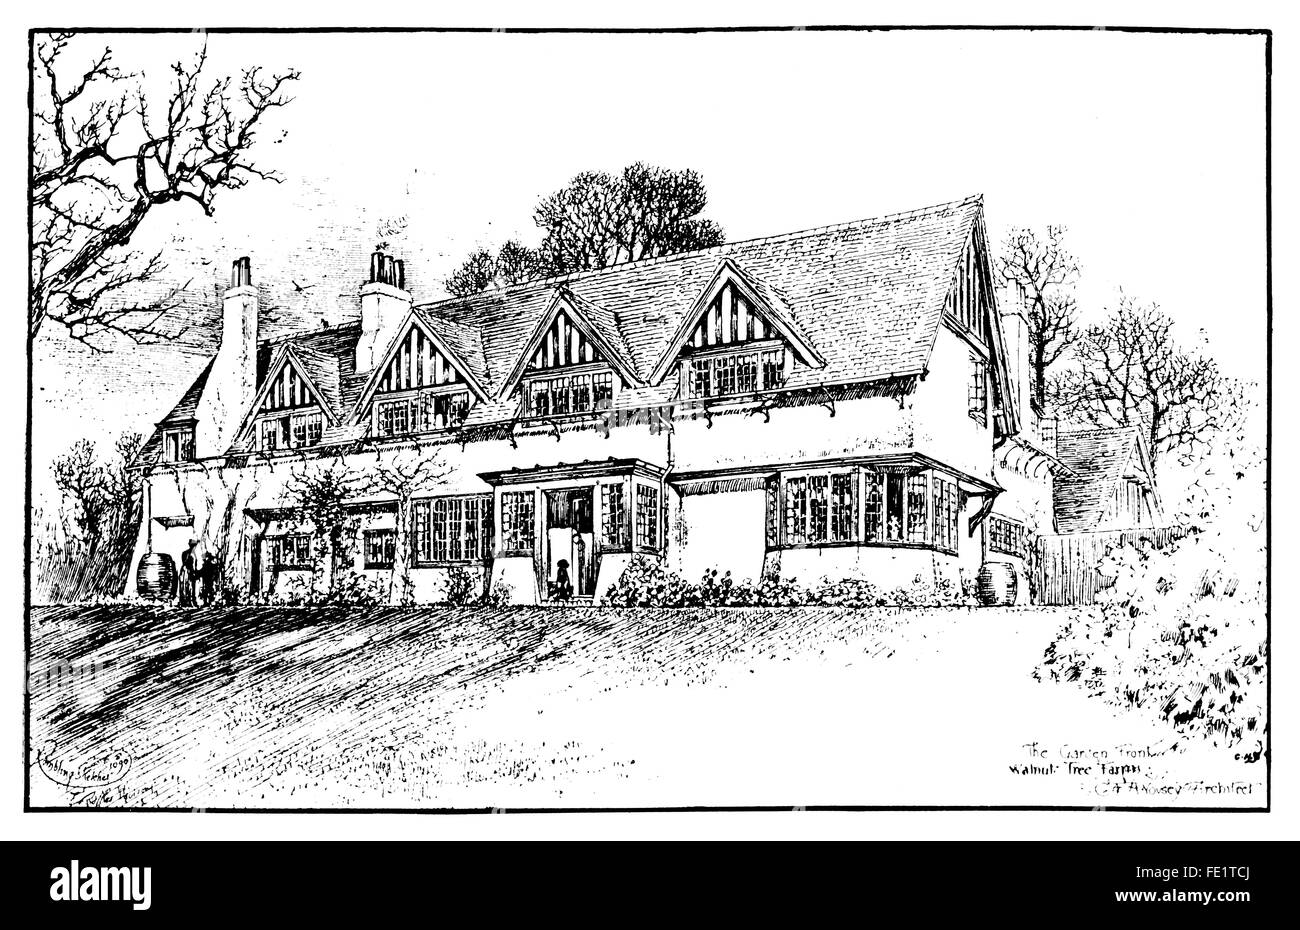 UK, England, Castlemoreton, Malvern, Walnut Tree Farm, designed by architect CFA, Voysey, line Illustration from 1897 Stock Photo